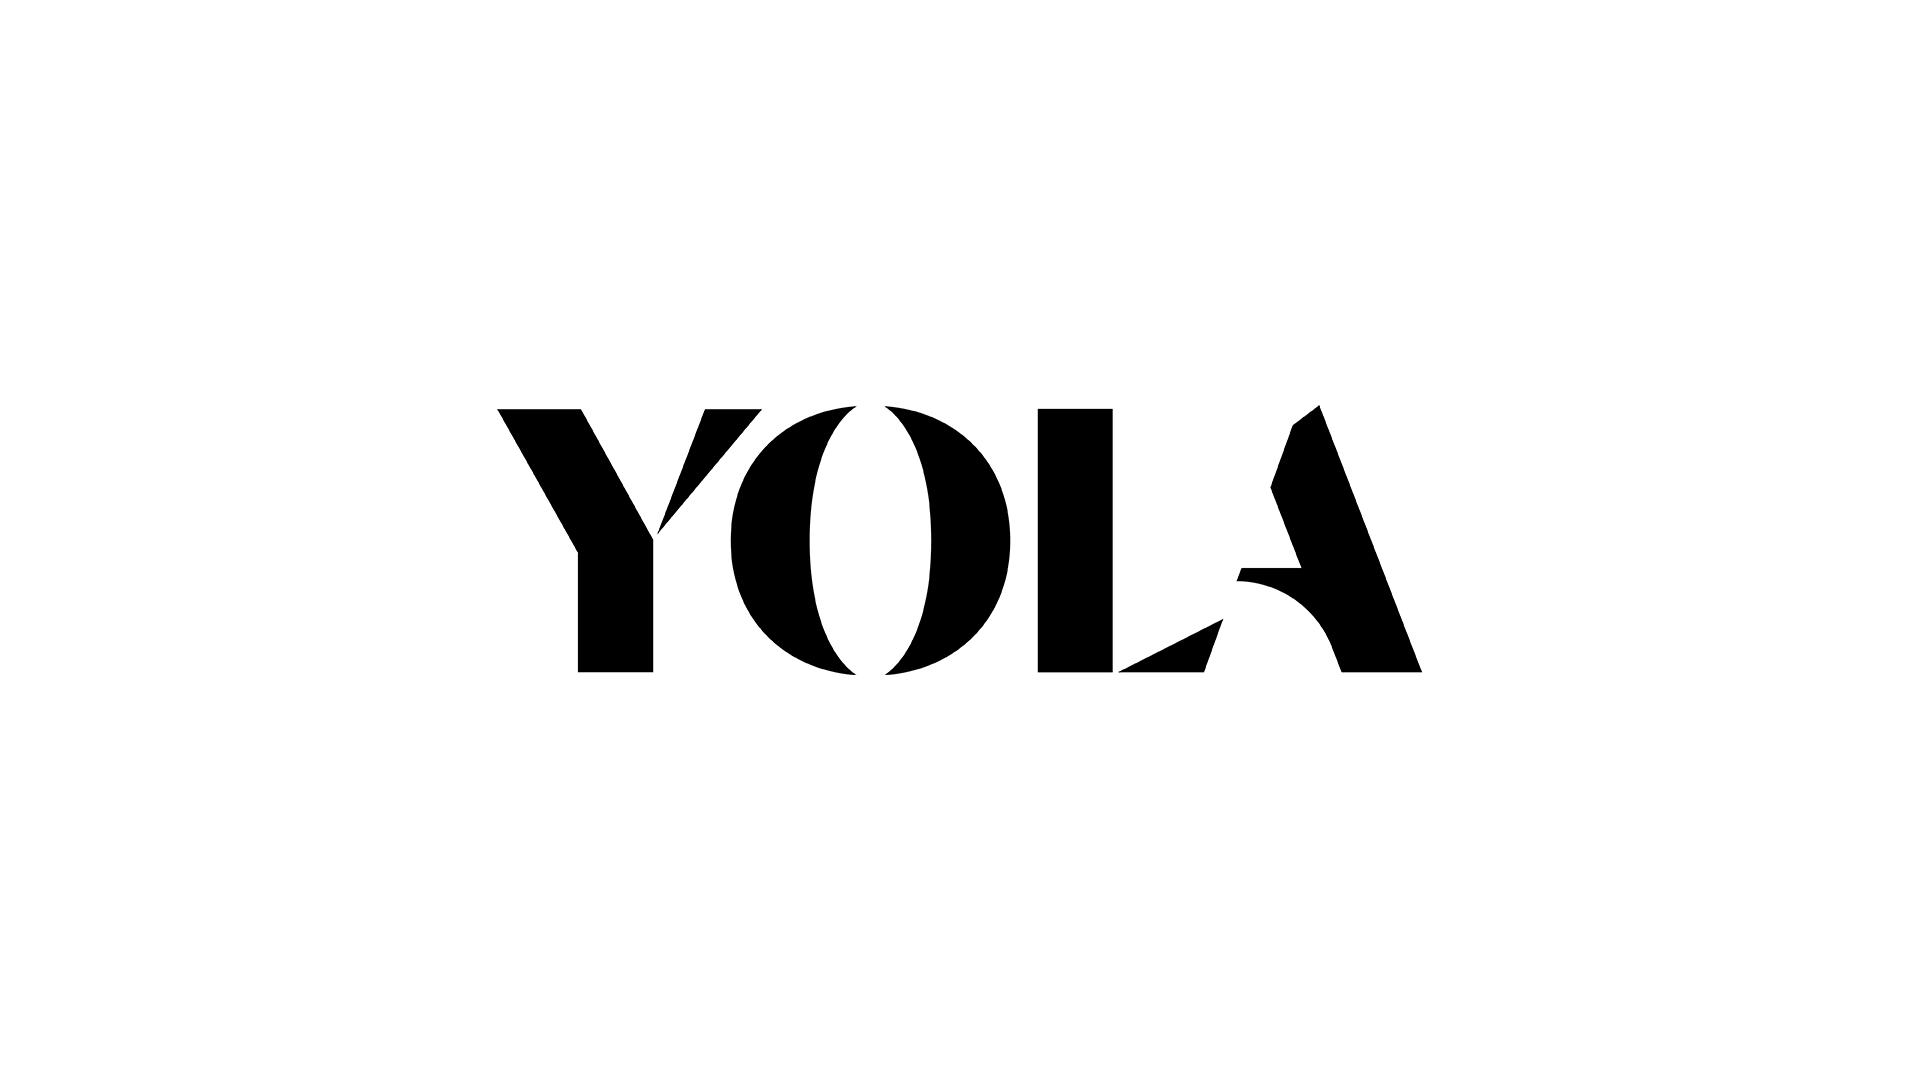 Yola Logo - Members of YOLA (Youth Orchestra Los Angeles)